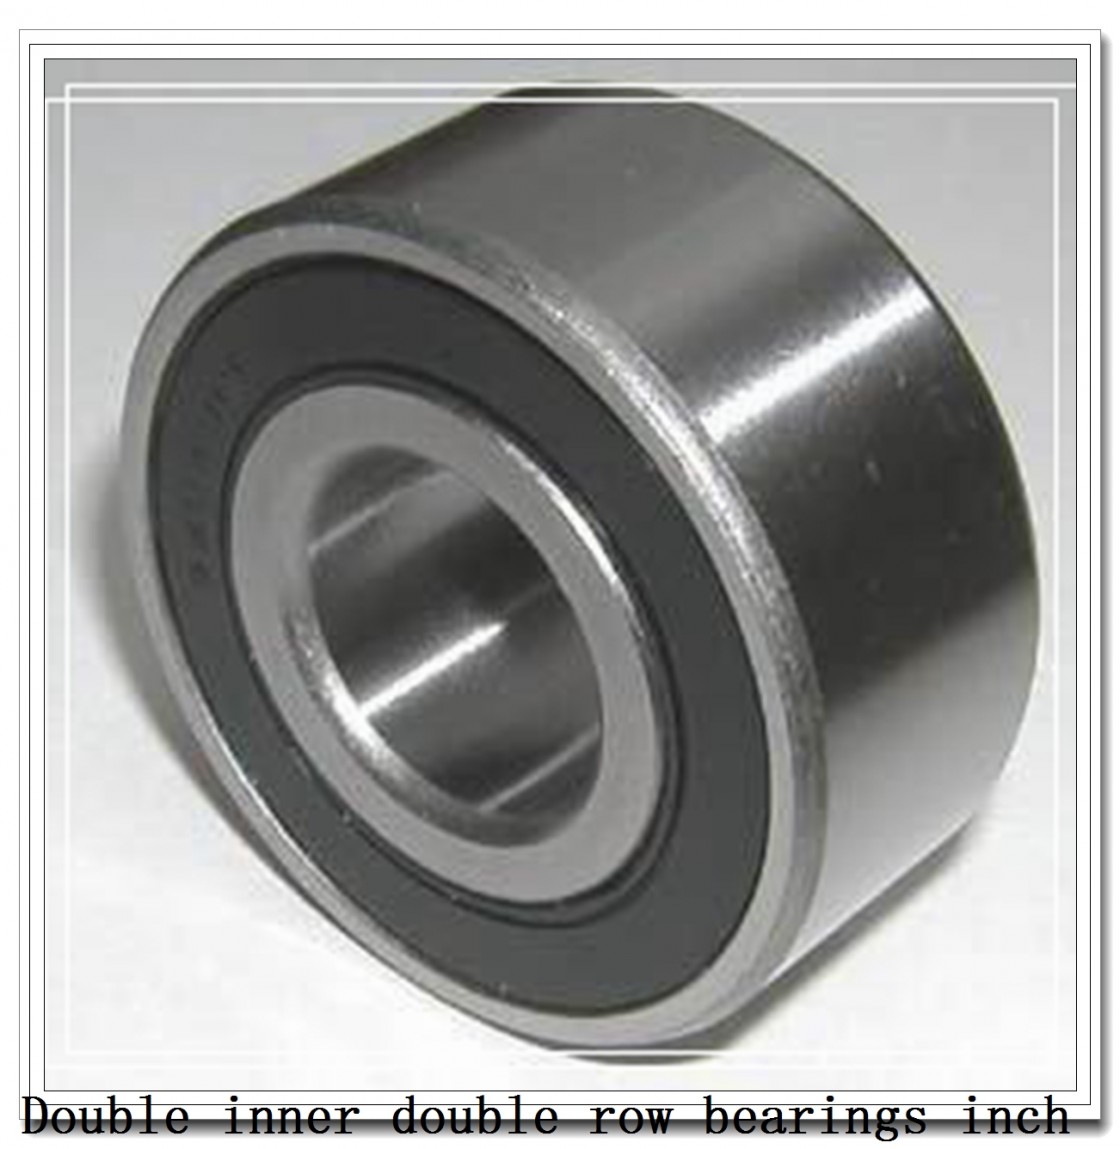 46790R/46720D Double inner double row bearings inch